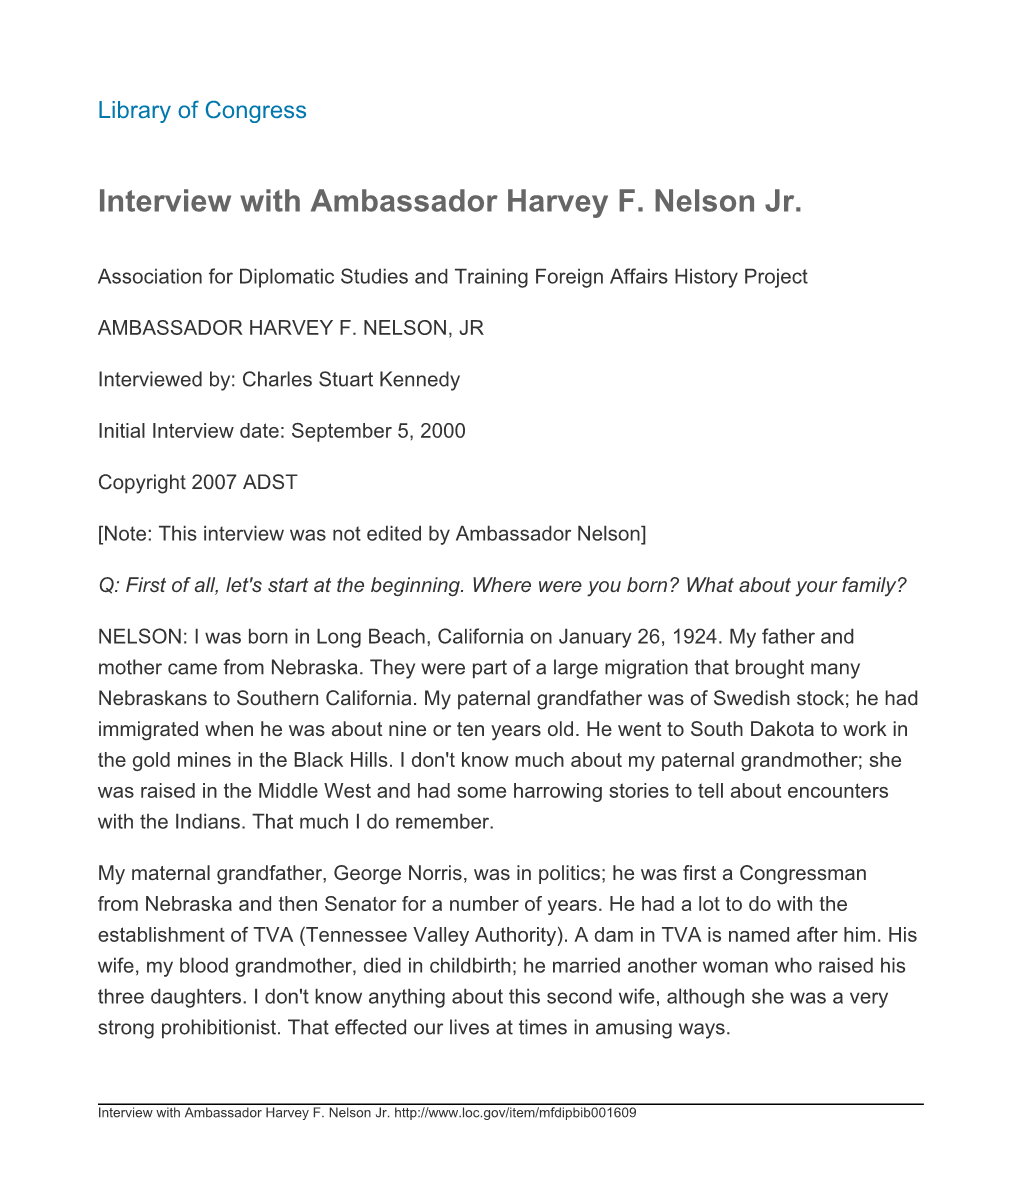 Interview with Ambassador Harvey F. Nelson Jr